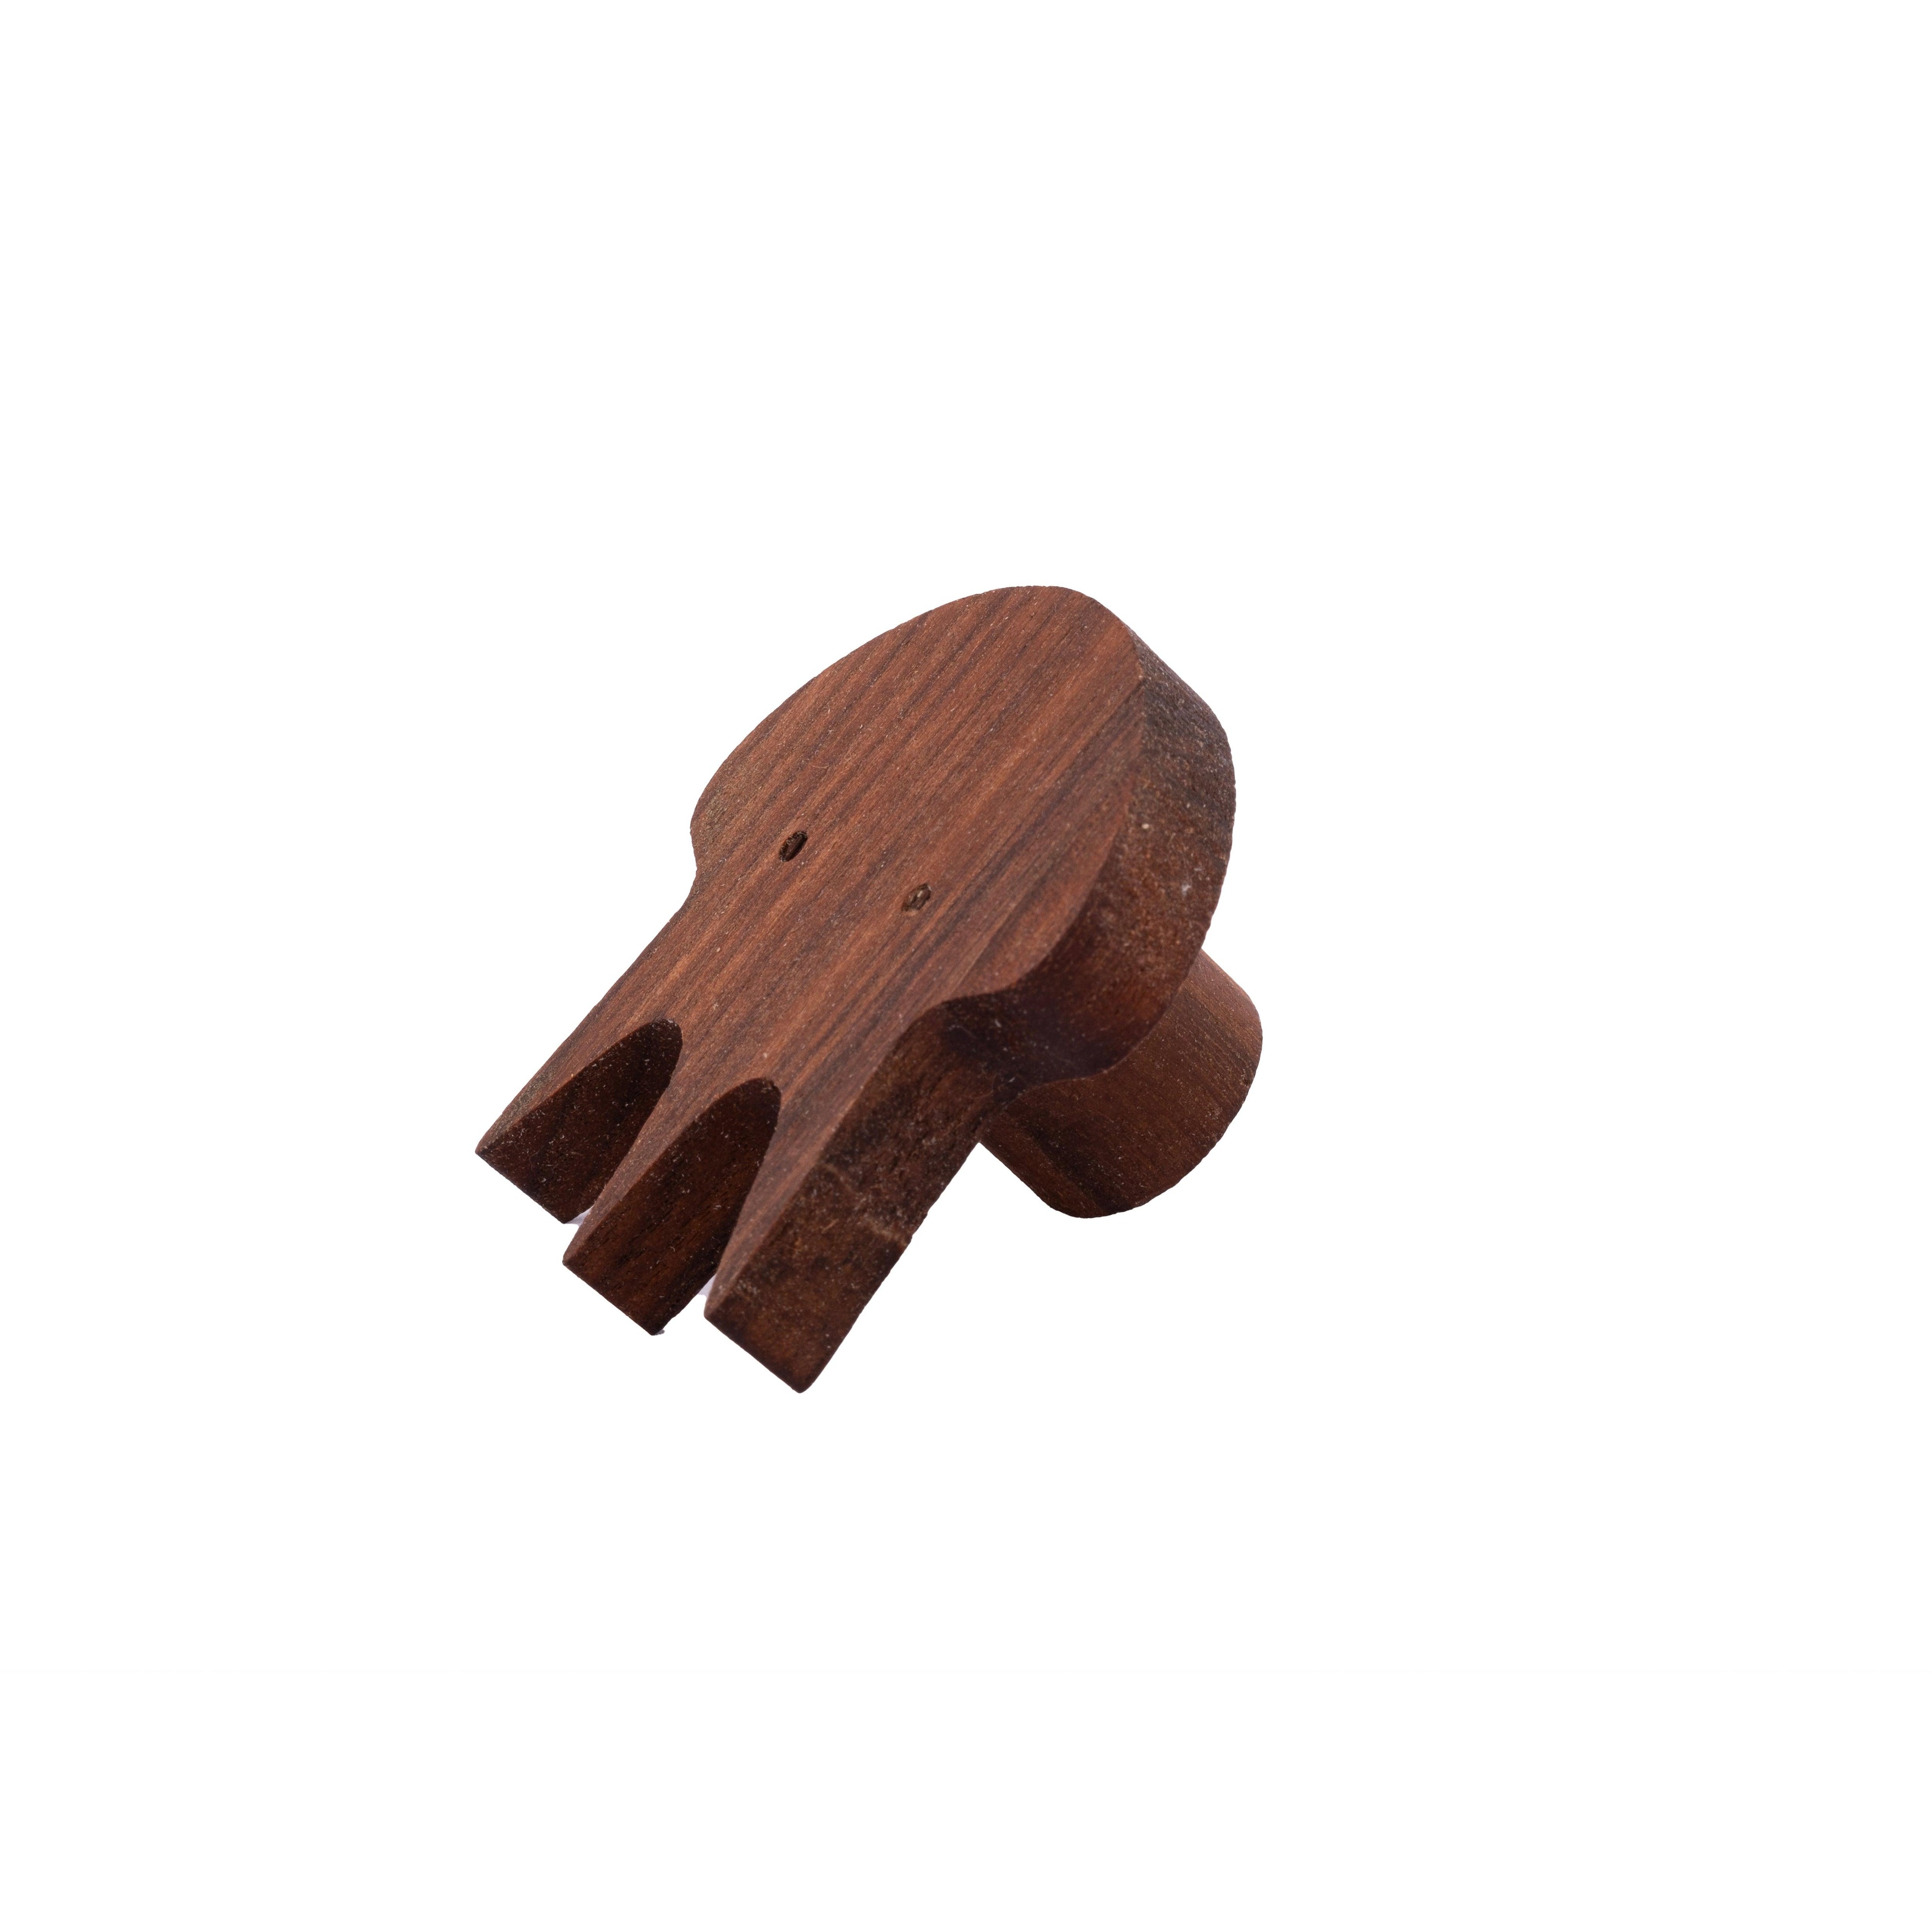 Squid Wooden Knob Hook 60mm / Walnut / Wood - M A N T A R A